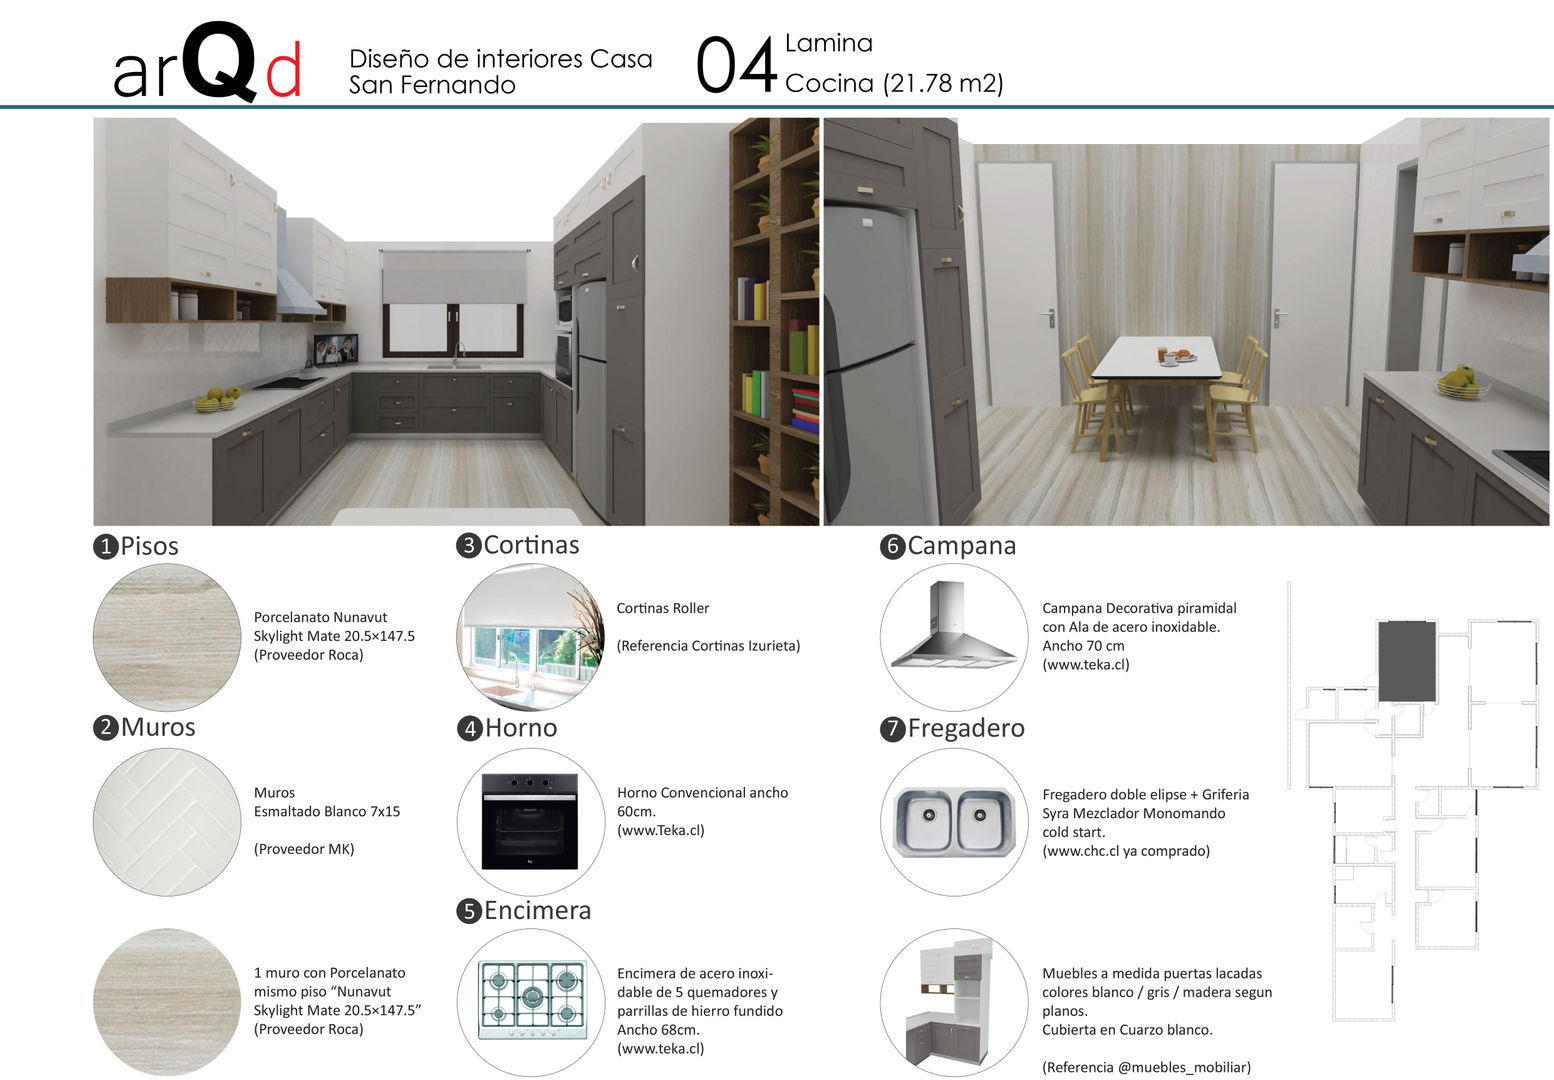 Diseño Interior Casa, ARQD spa ARQD spa Kitchen units